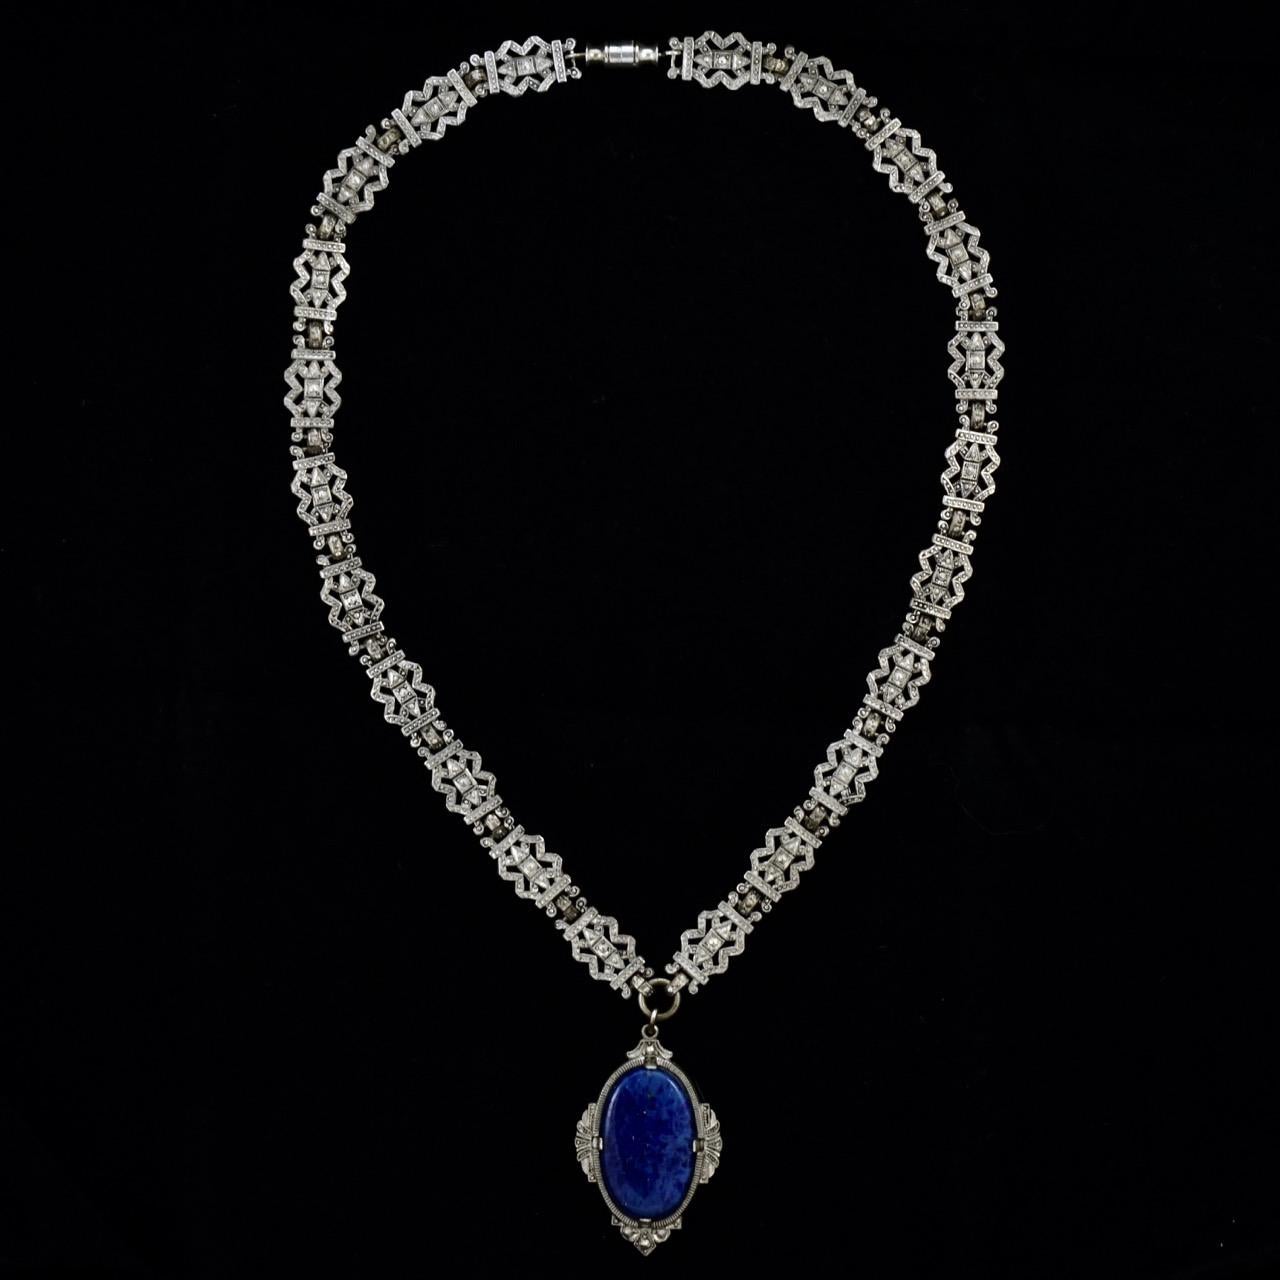 Art Deco Silver Plated Link Chain Sautoir Necklace with Lapis Lazuli Pendant 1